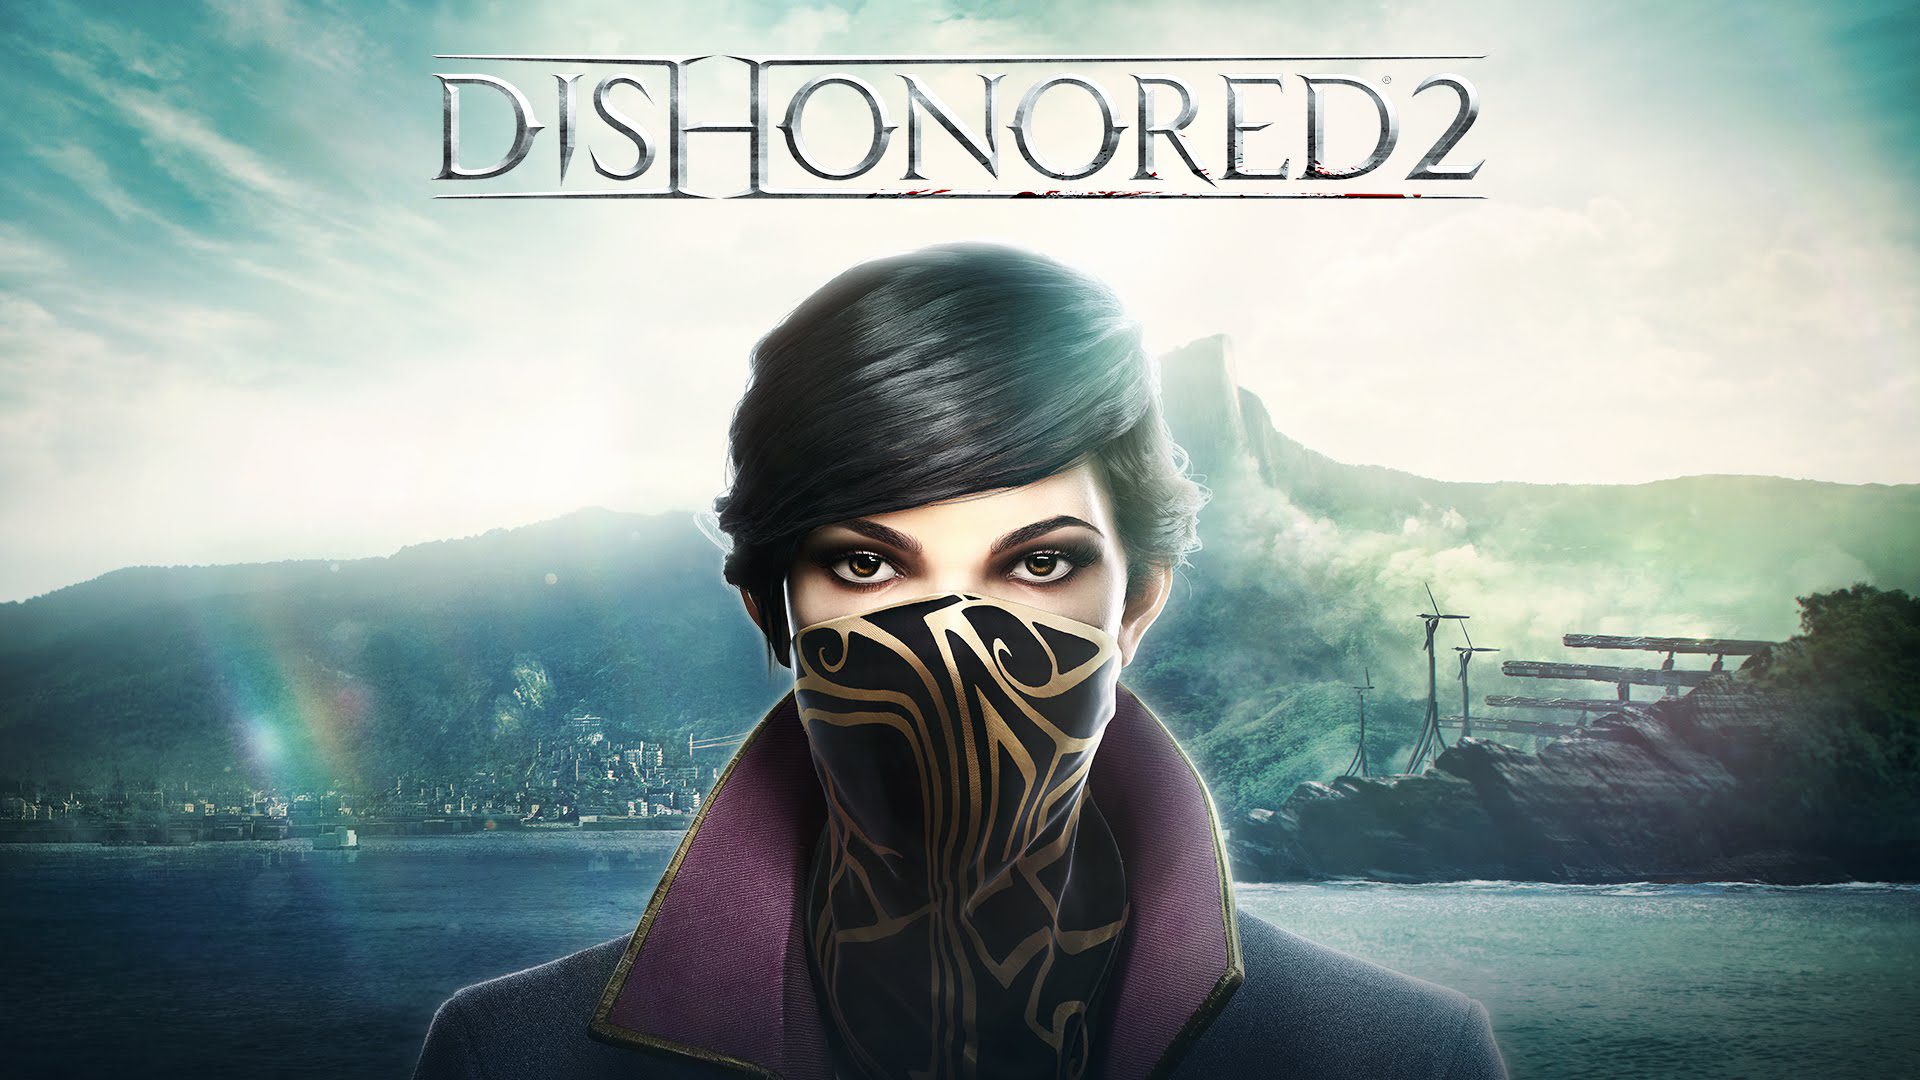 Juego Xbox One Dishonored 2